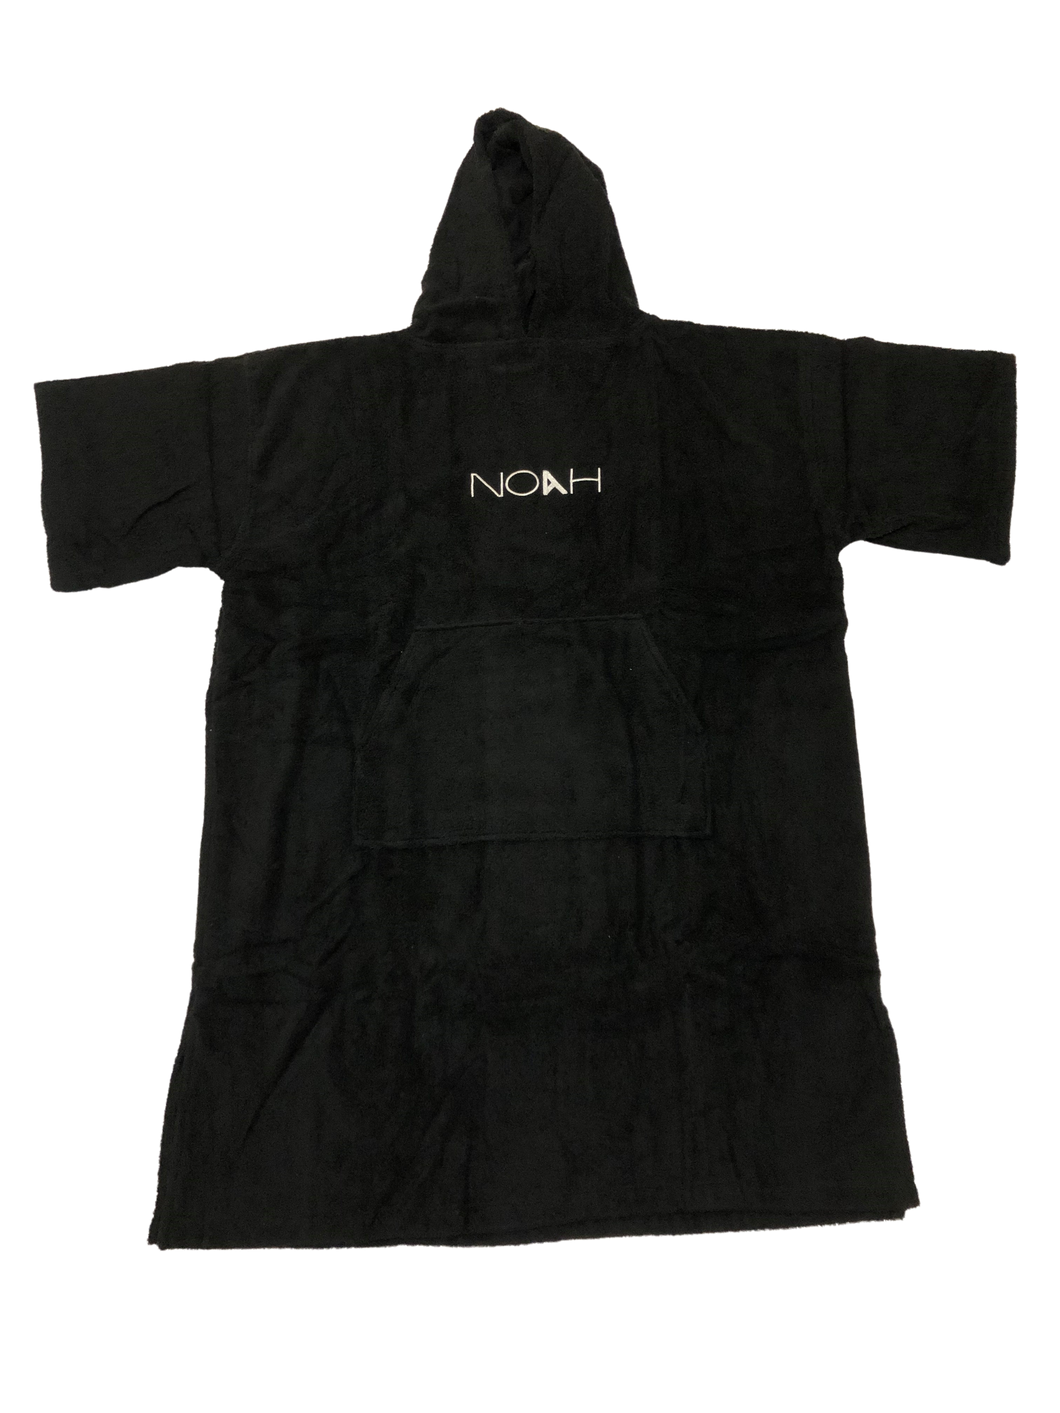 NOAH PONCHO TOWEL ROBE BLACK - JUNIOR/SMALL